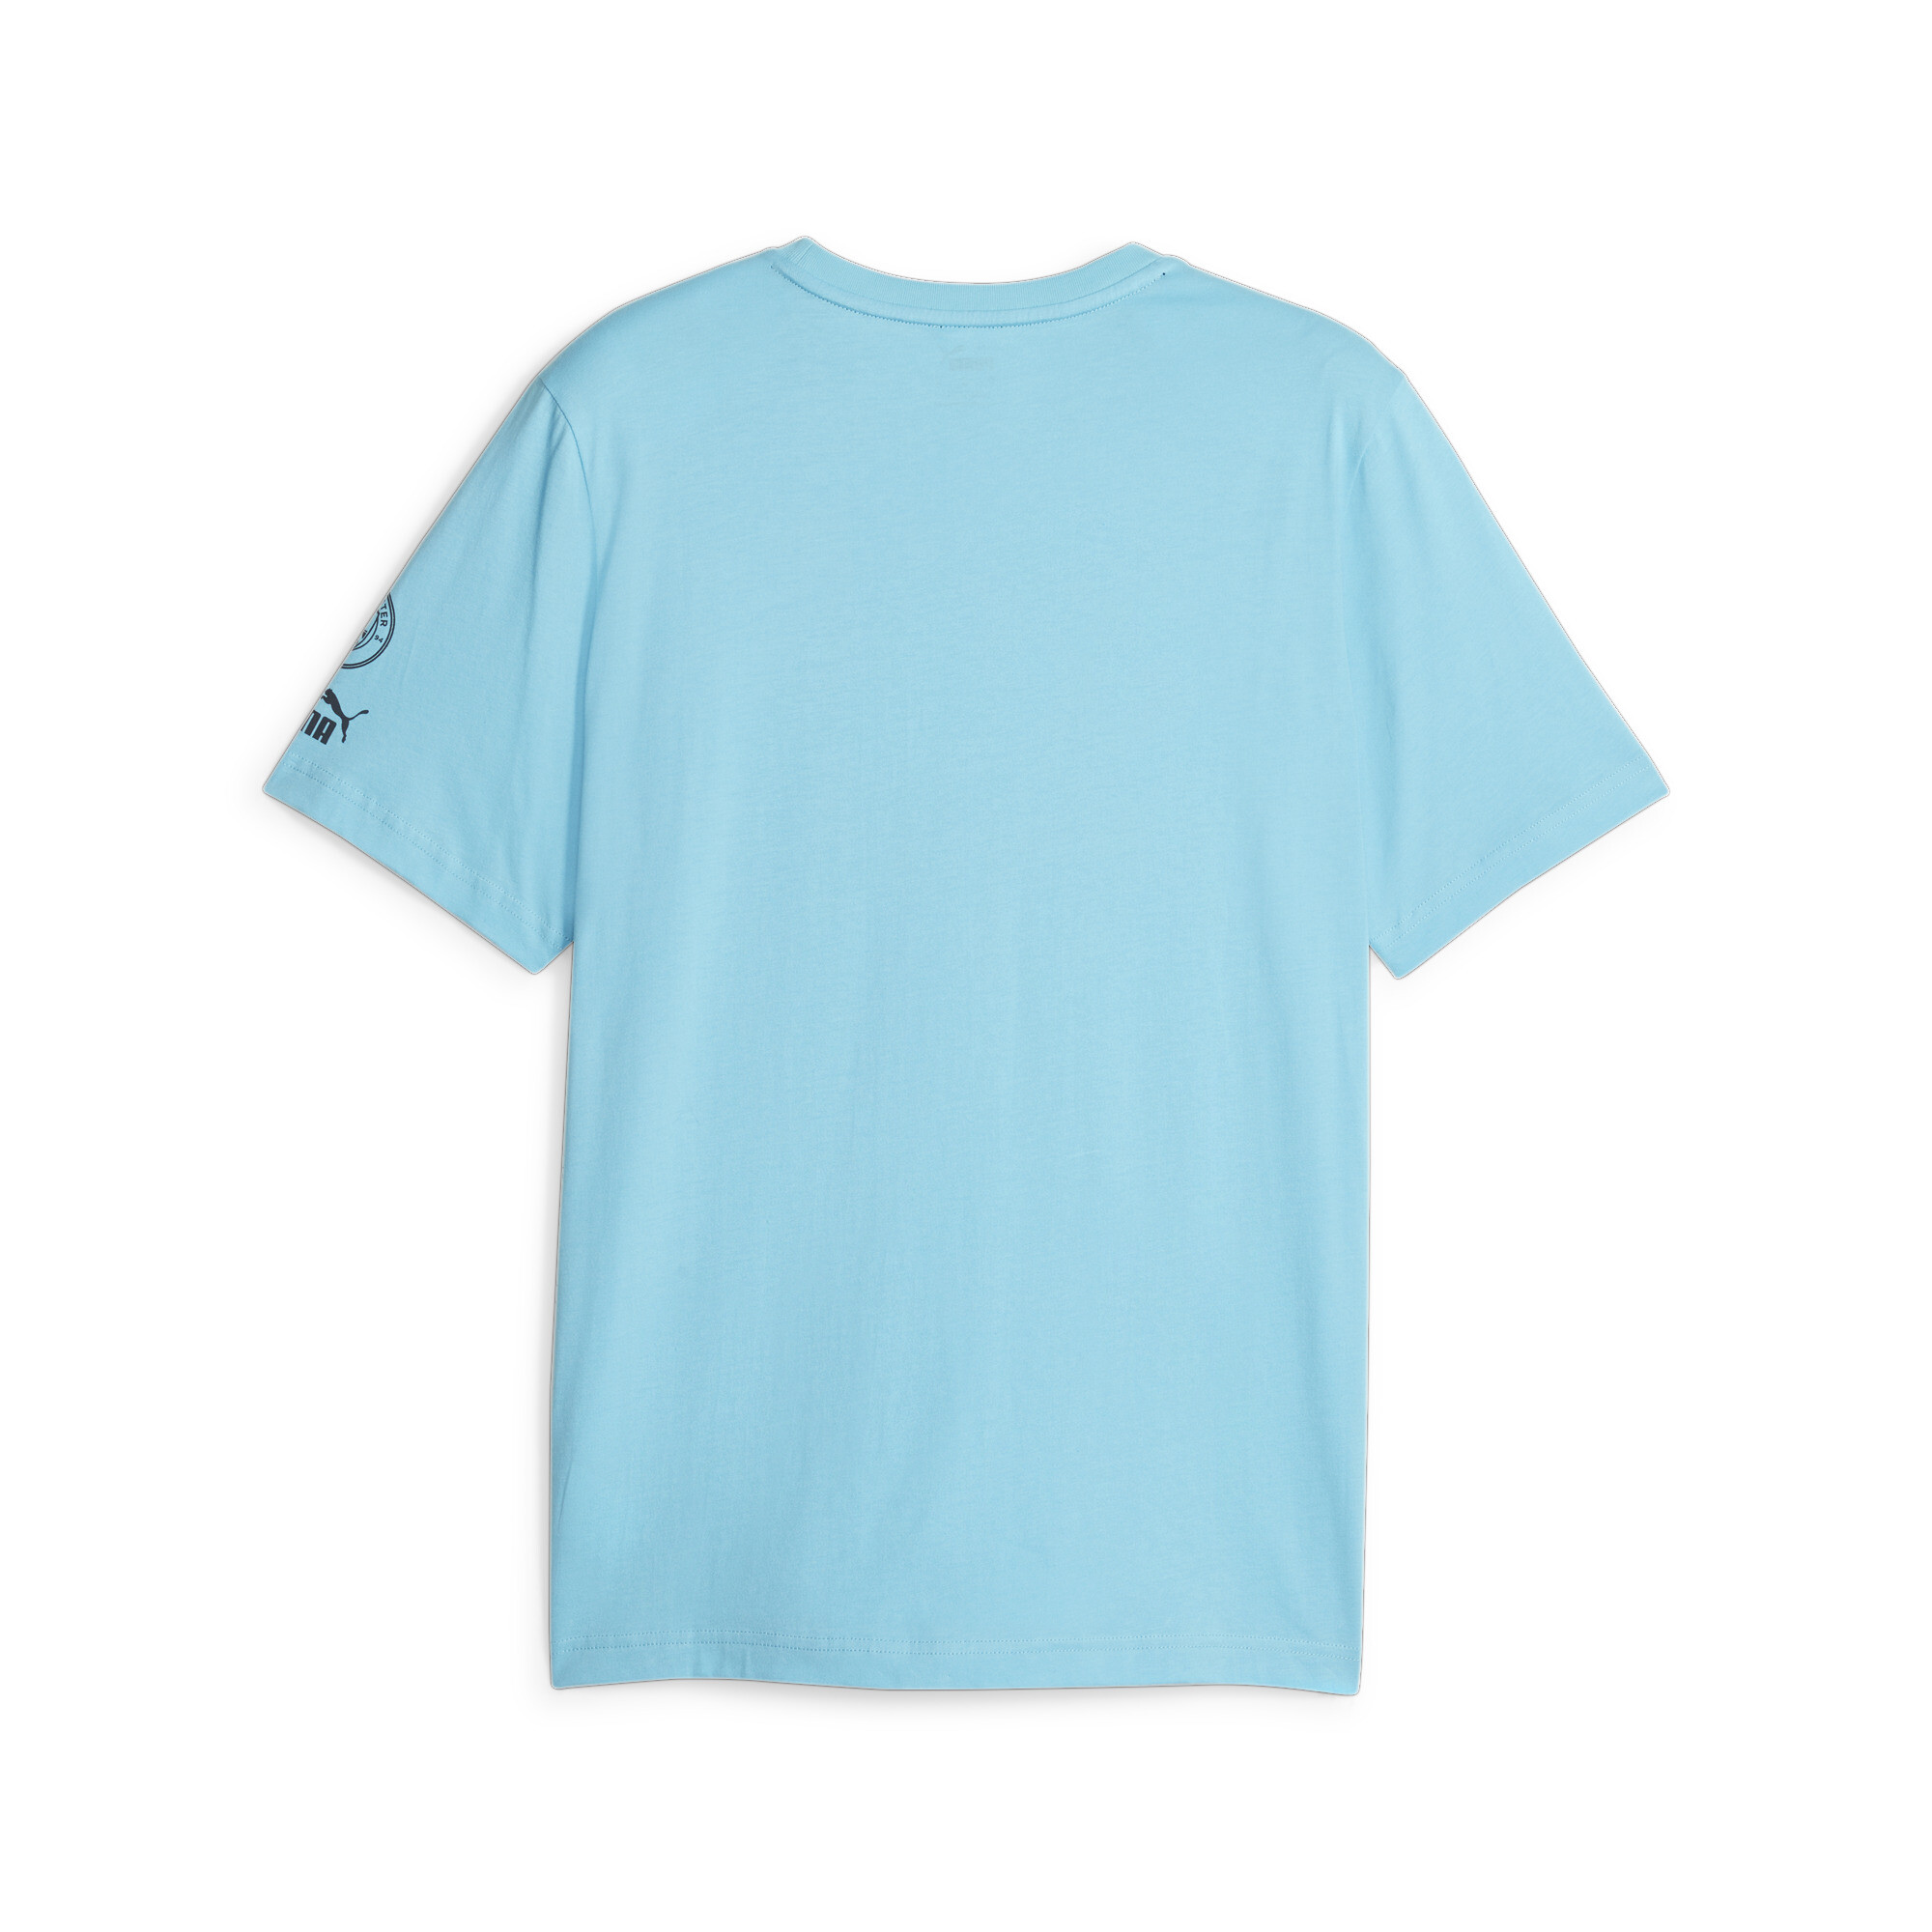 Men's PUMA Manchester City FtblCore Graphic T-Shirt In Blue, Size XS